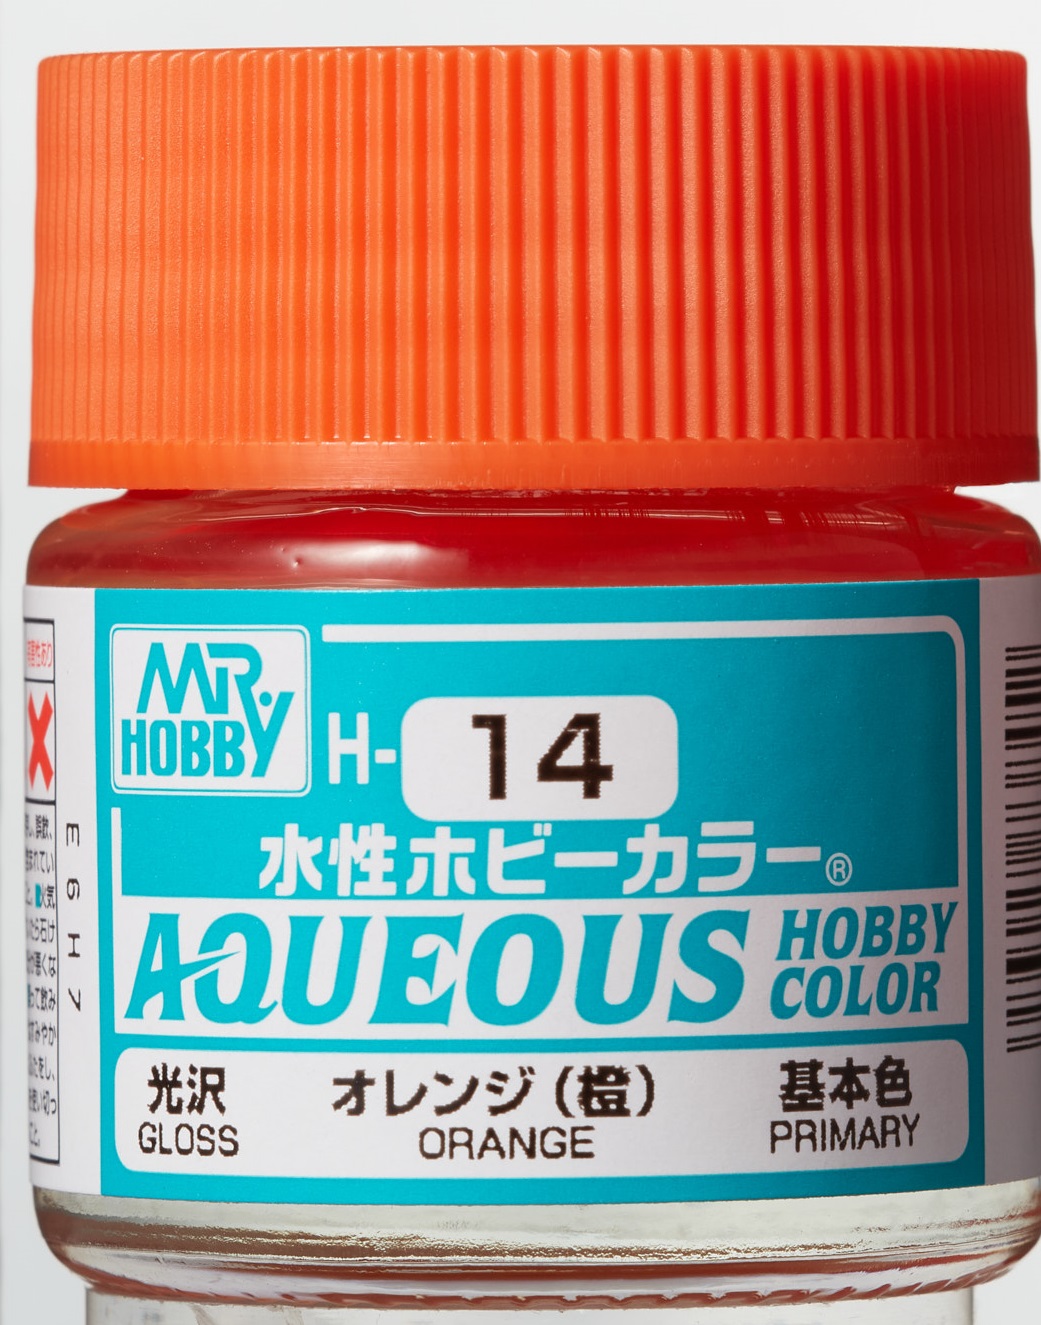 Mr. Aqueous Hobby Color - Orange - H14 - Orange